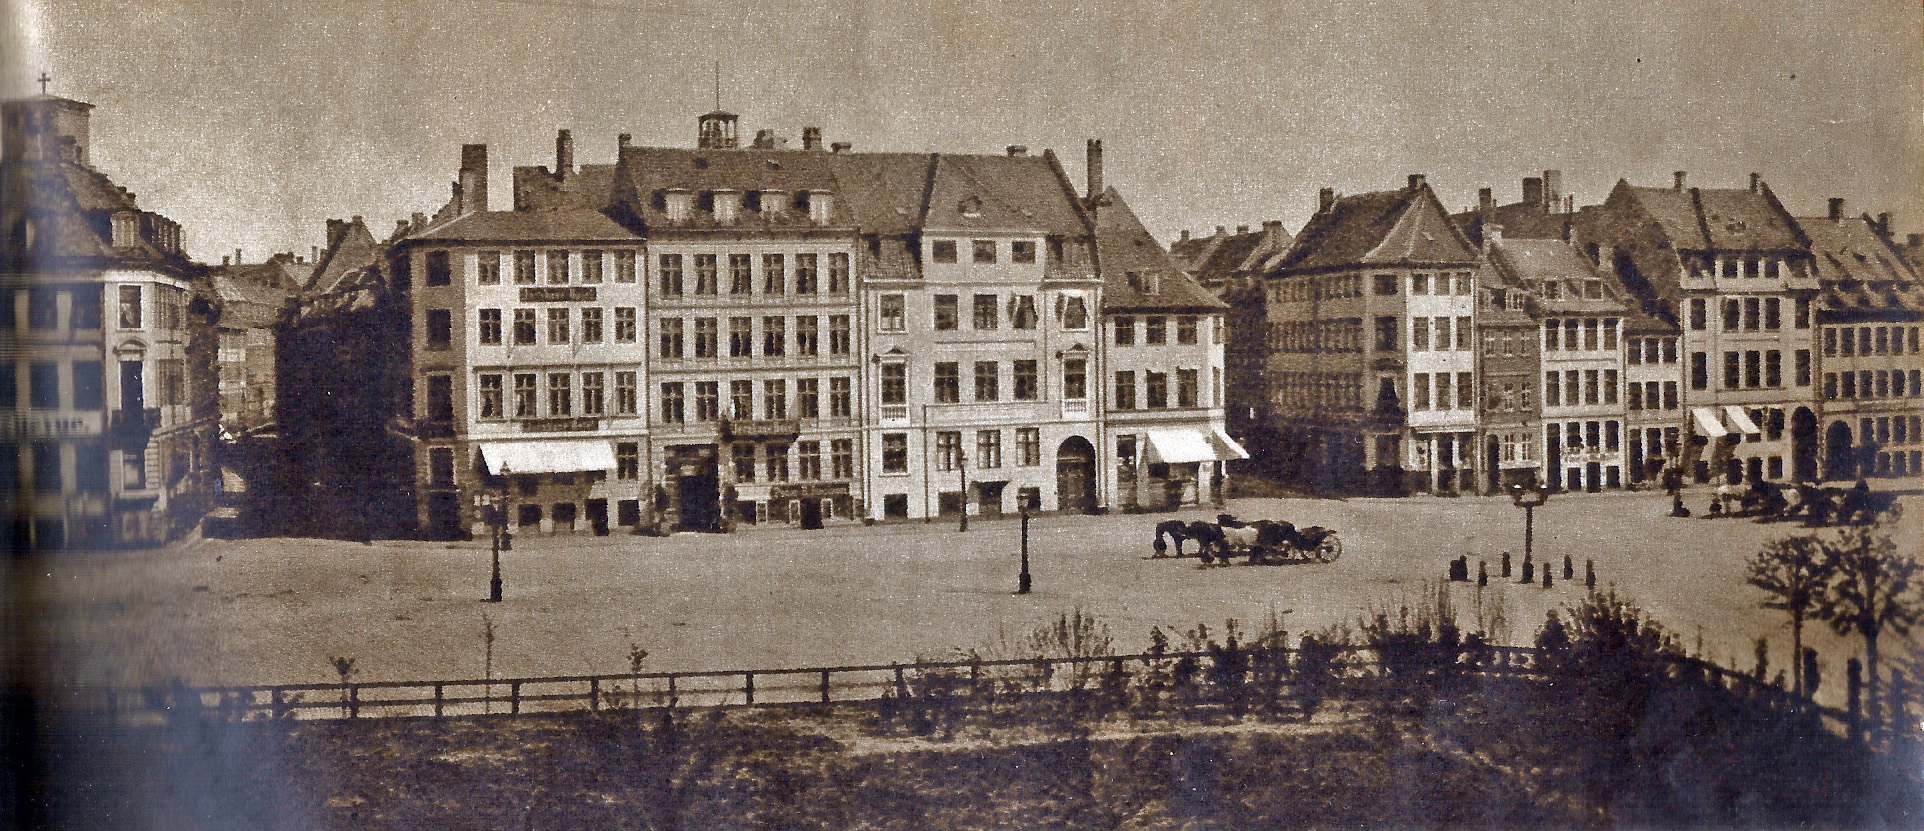 Raadhuspladsen 1885